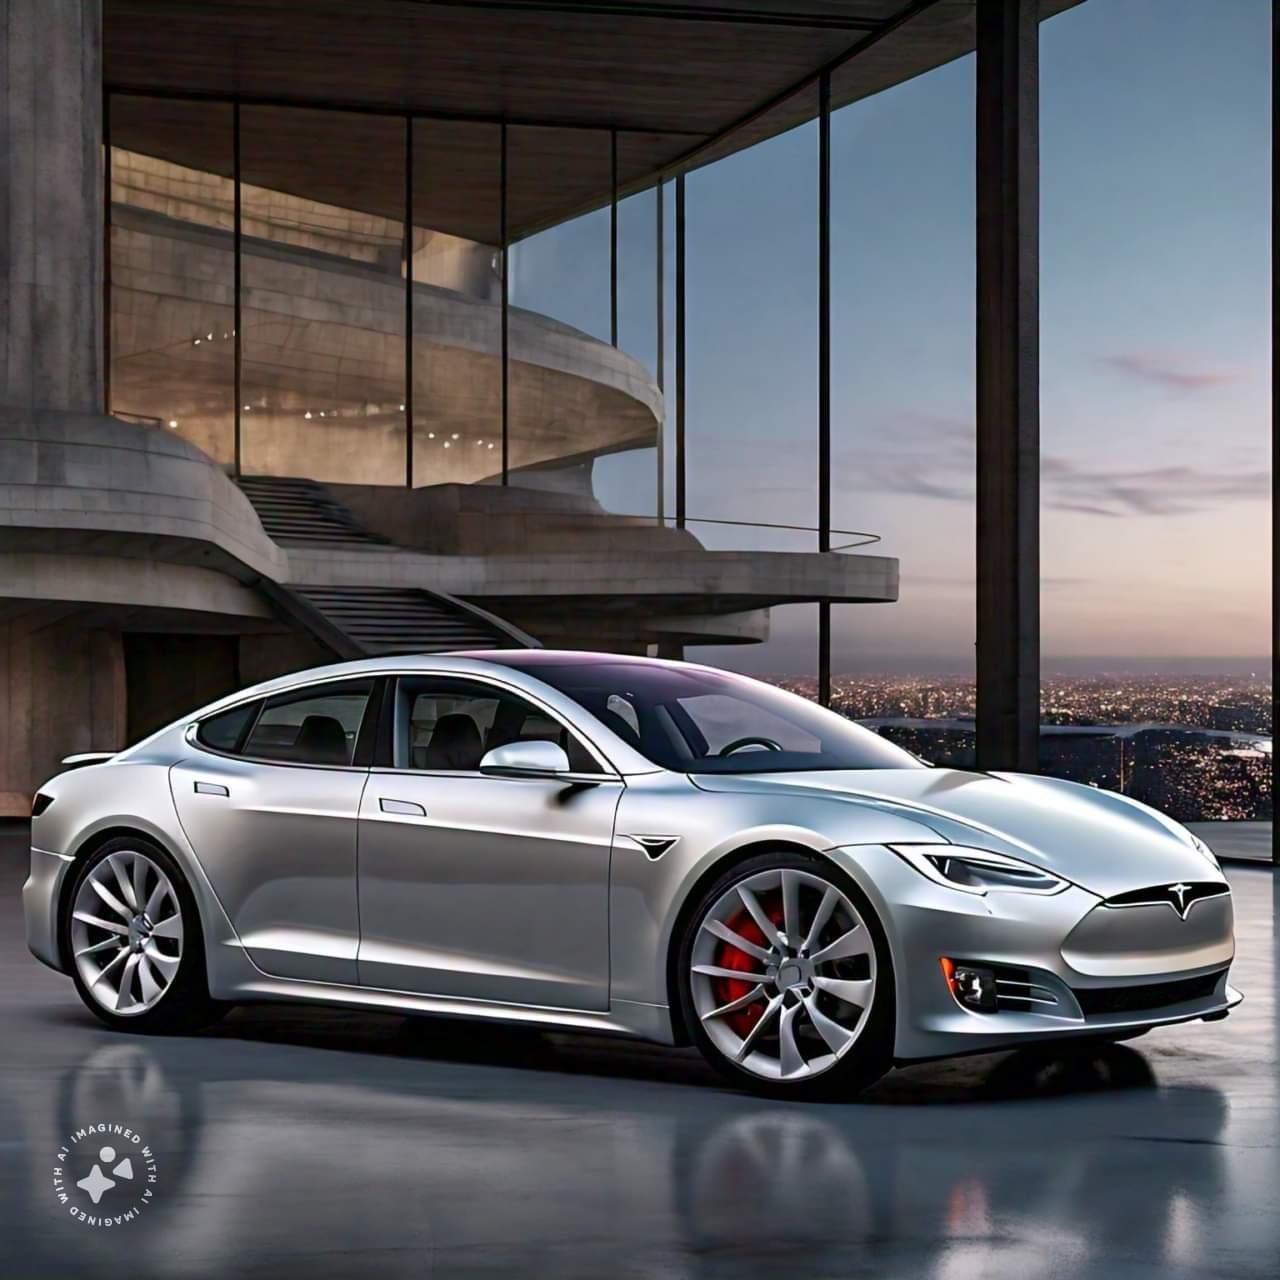 Should you buy a Tesla?